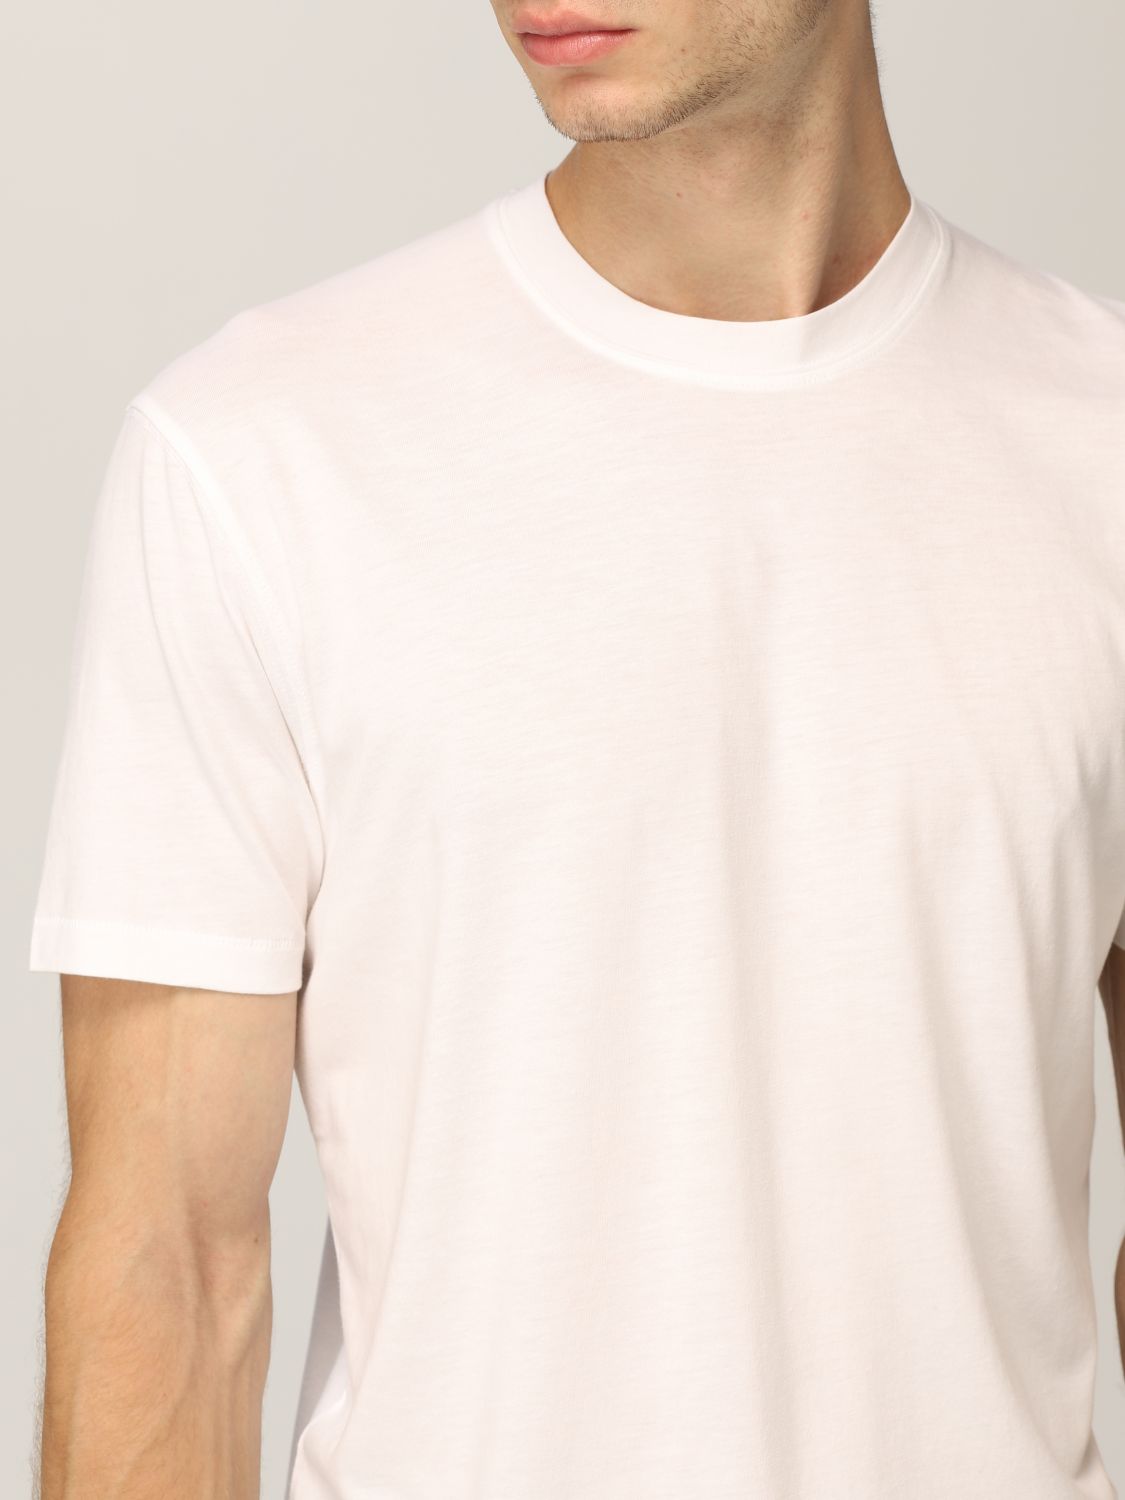 Camiseta Tom Ford: Camiseta hombre Tom Ford blanco 4